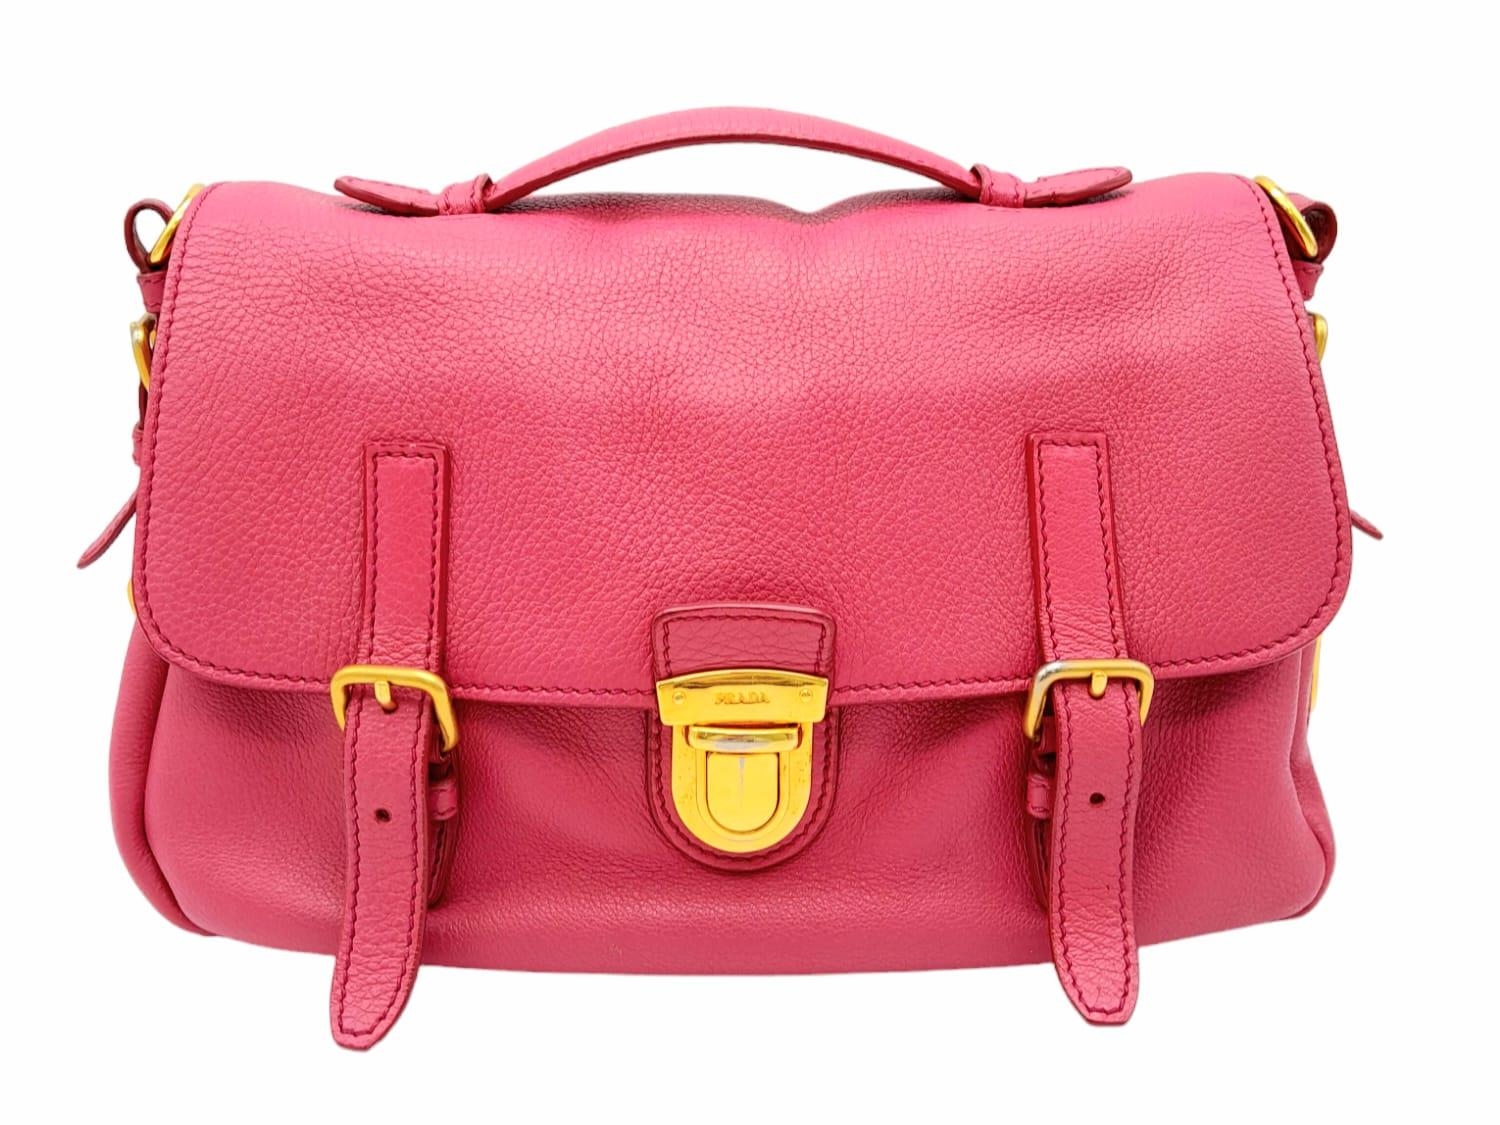 A Prada Vitello Daino satchel bag, soft pink leather, matching leather/fabric interior, gold tone